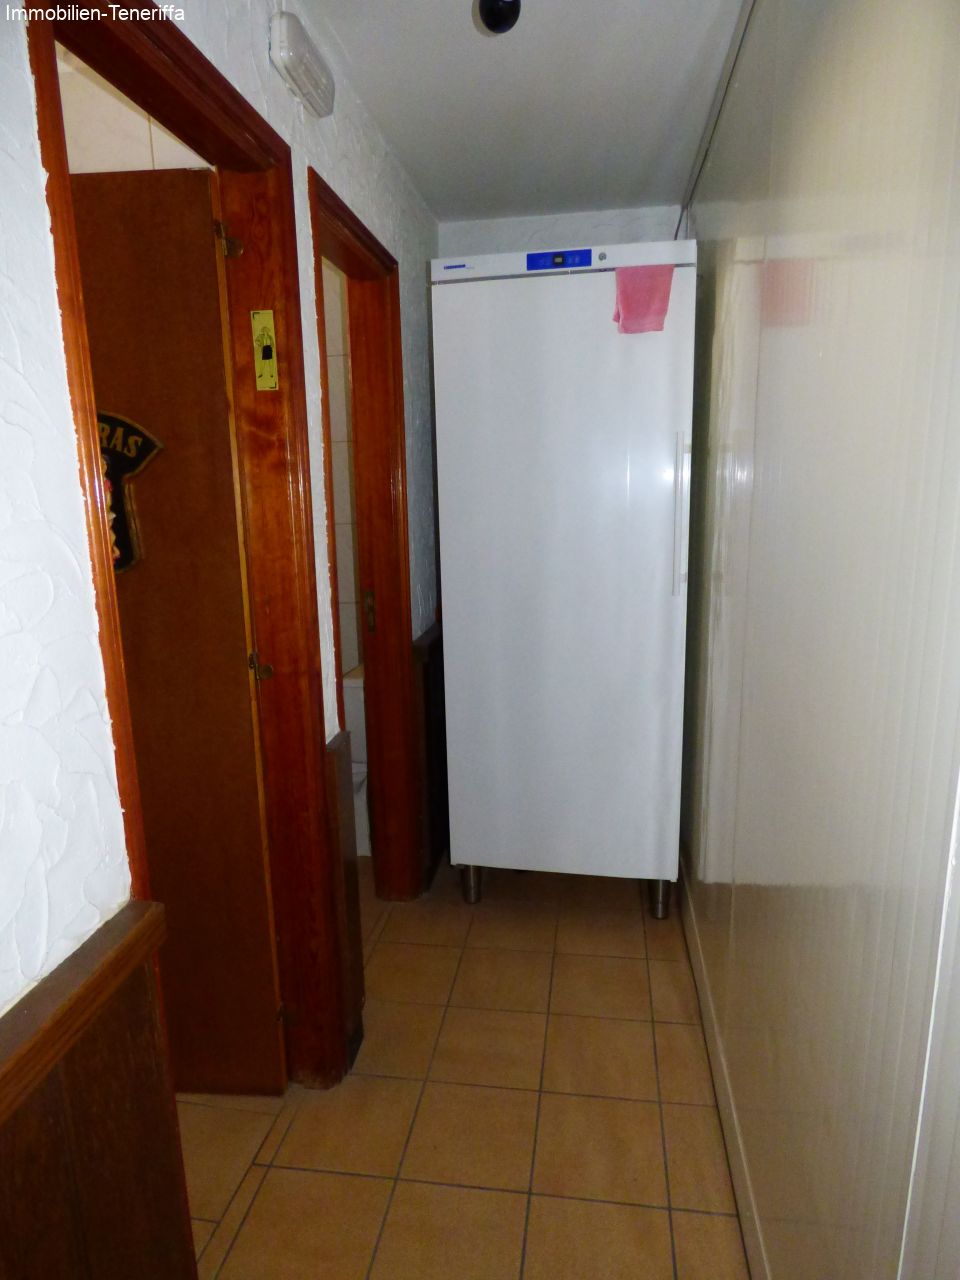 Additional lockable refrigerator